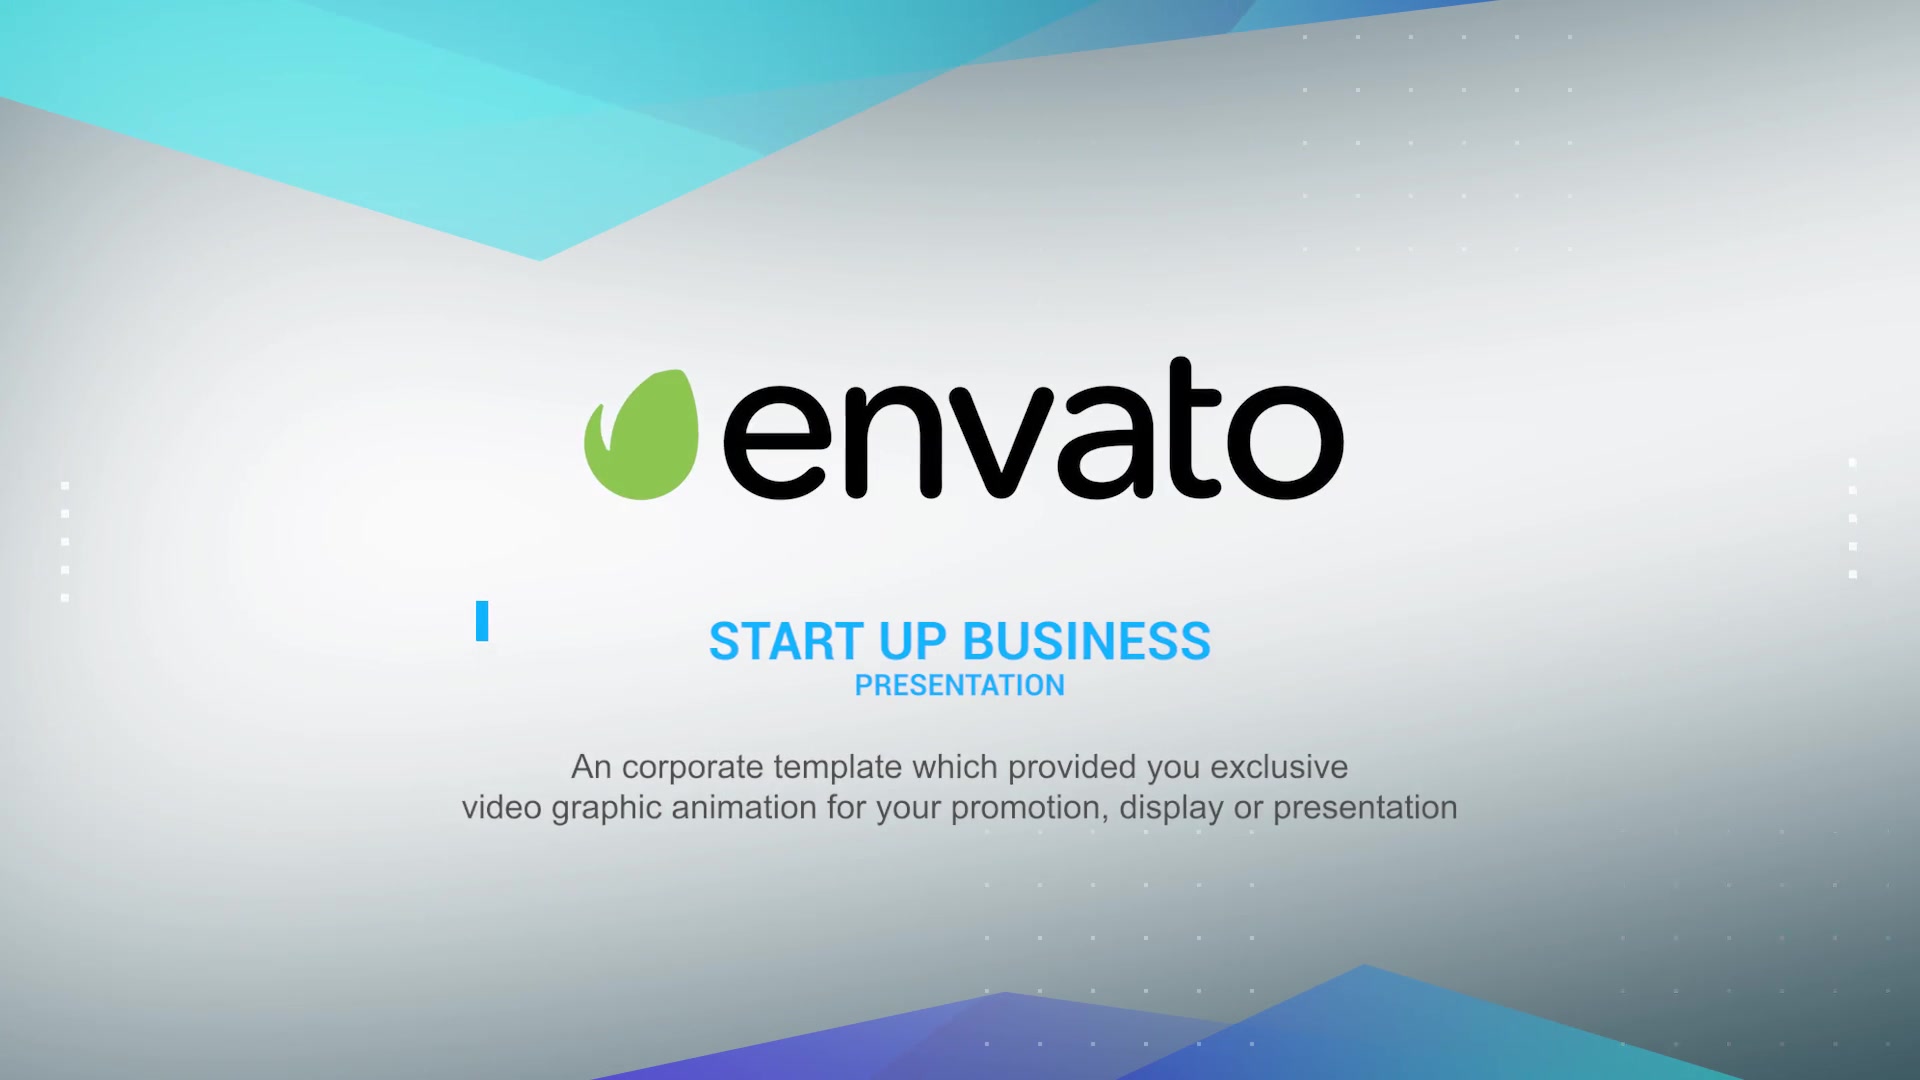 Start Up Business Presentation Premiere Videohive 35921373 Premiere Pro Image 12